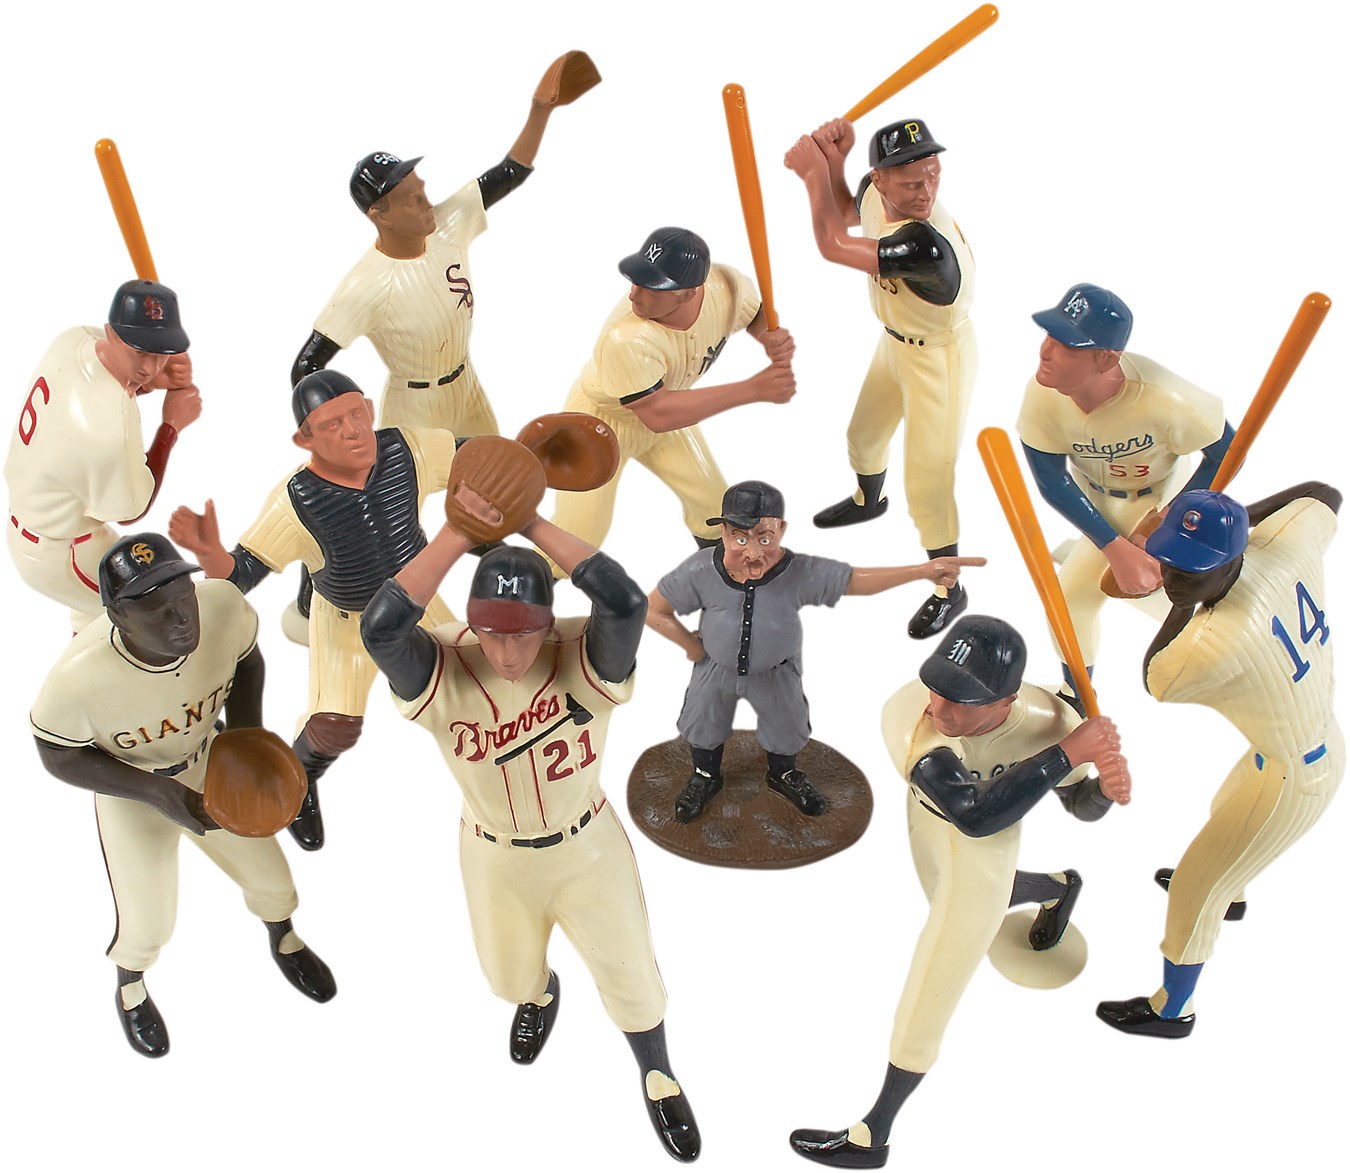 Baseball Memorabilia - Huge Sports Memorabilia Collection from Hobby Old Timer (275+)